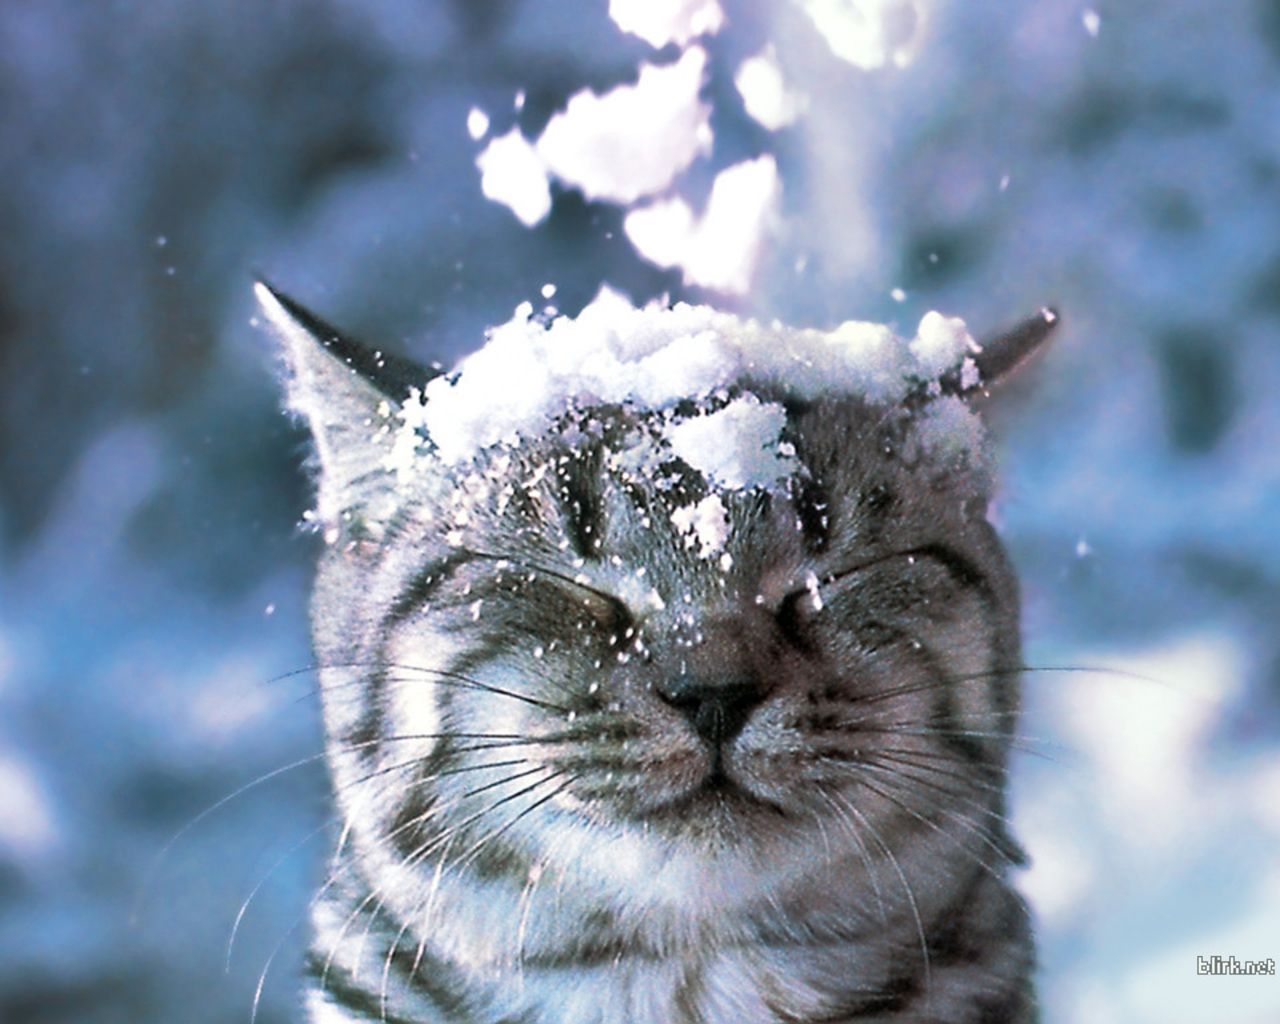  Winter Tiere Hintergrundbild 1280x1024. Cats Wallpaper: Cat in the Snow Wallpaper. Kittens cutest, Cute animals, Cats